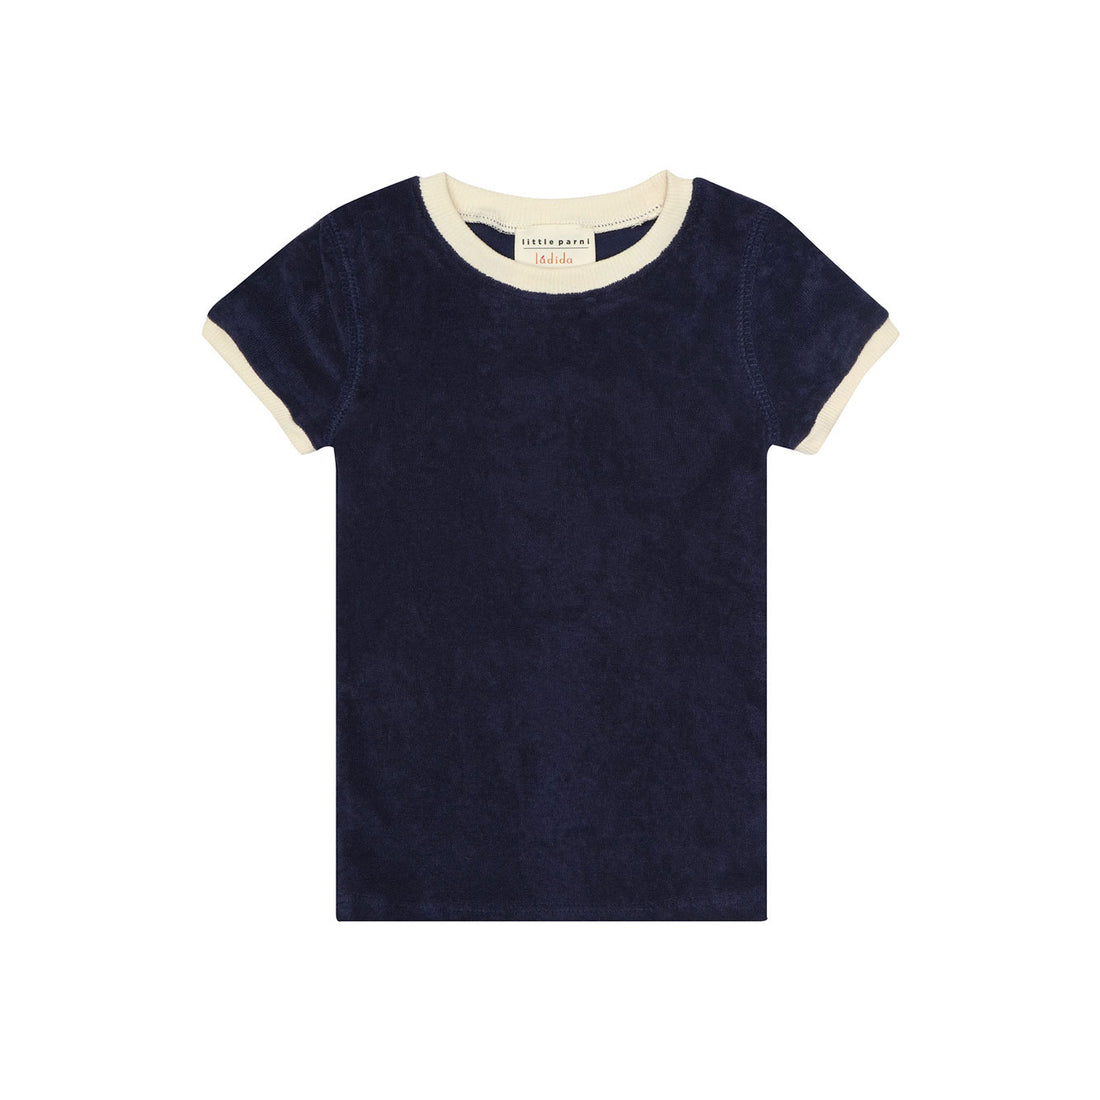 Little Parni x Ladida Navy Blue Short Sleeve T-shirt